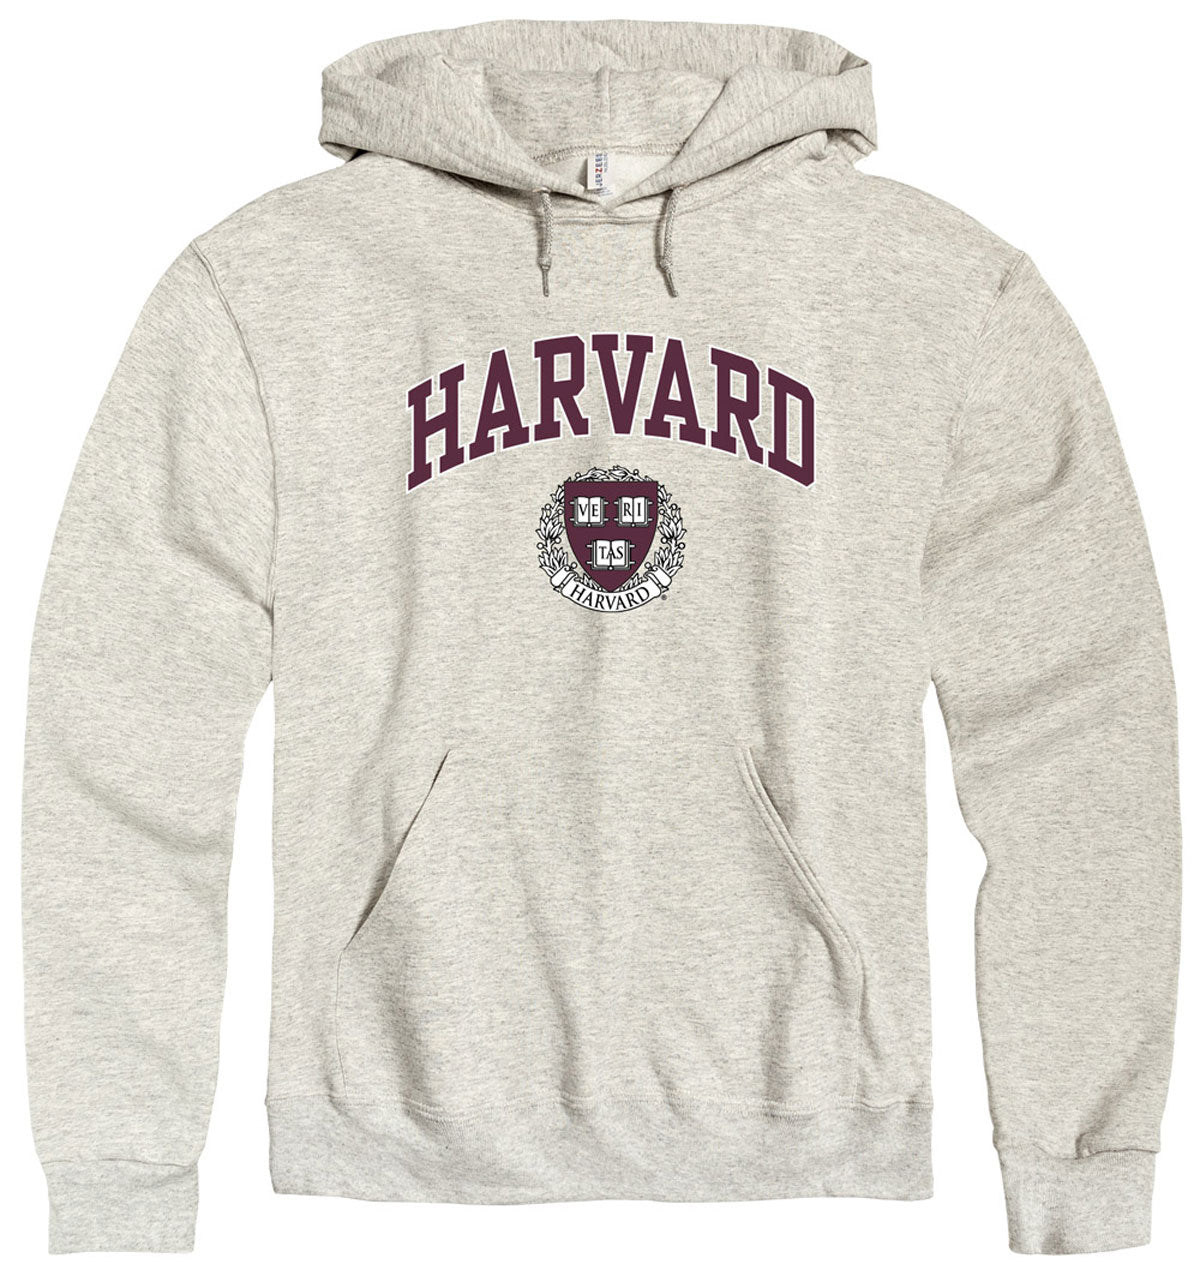 Harvard University arch and shield hoodie sweatshirt-Oatmeal-Shop College Wear